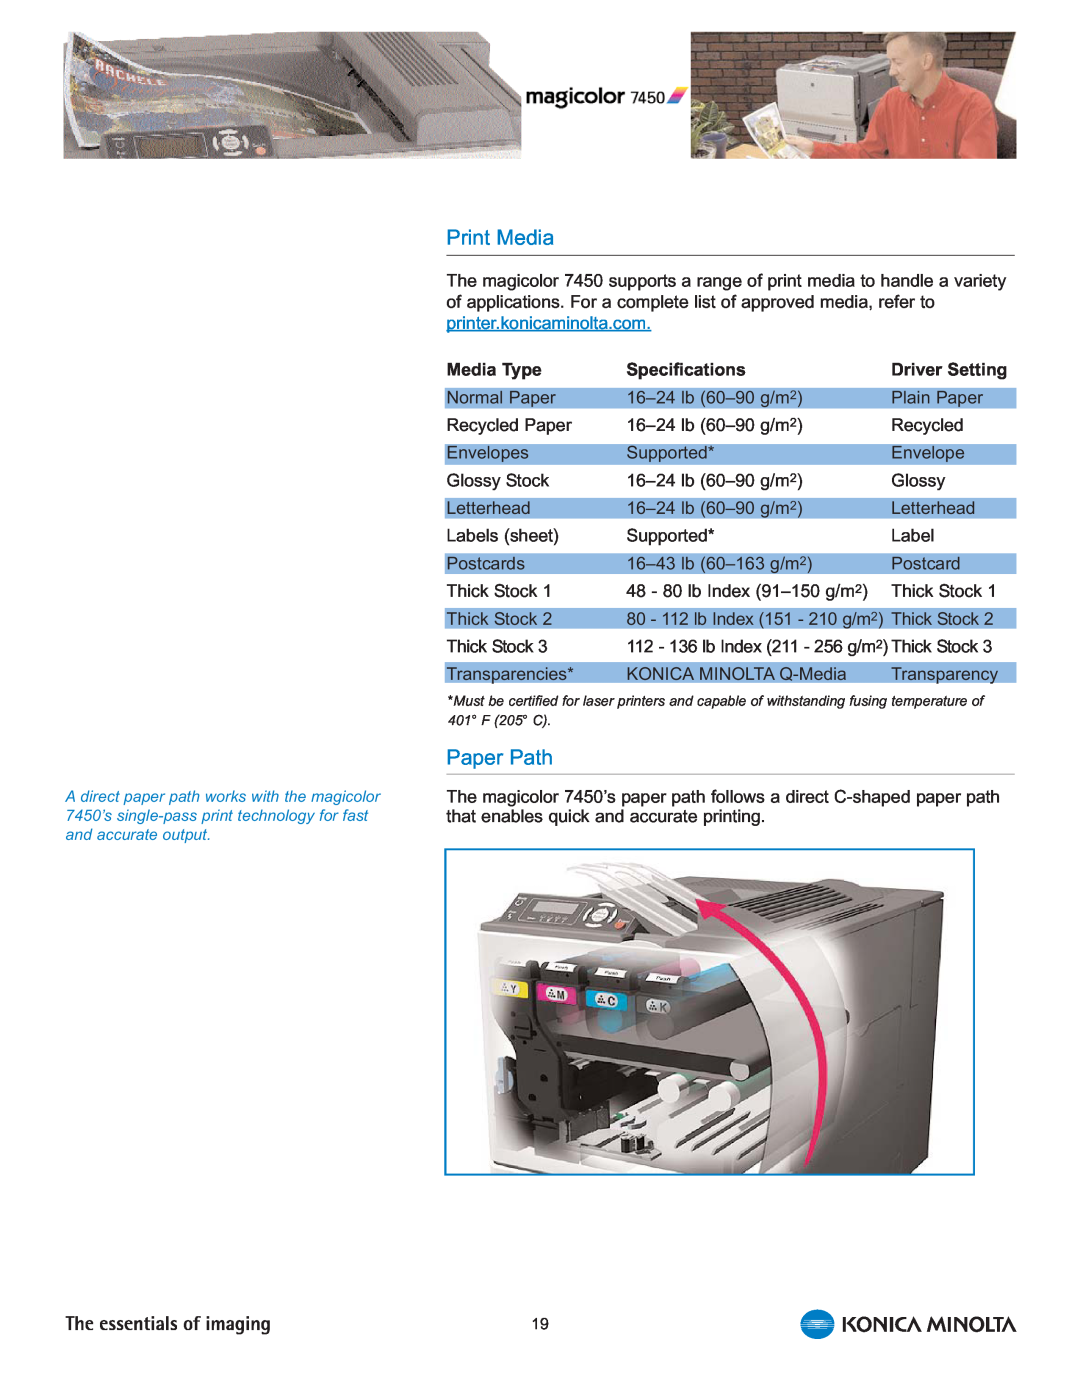 Konica Minolta 7450 manual Print Media, Paper Path, Media Type, Specifications, Driver Setting 